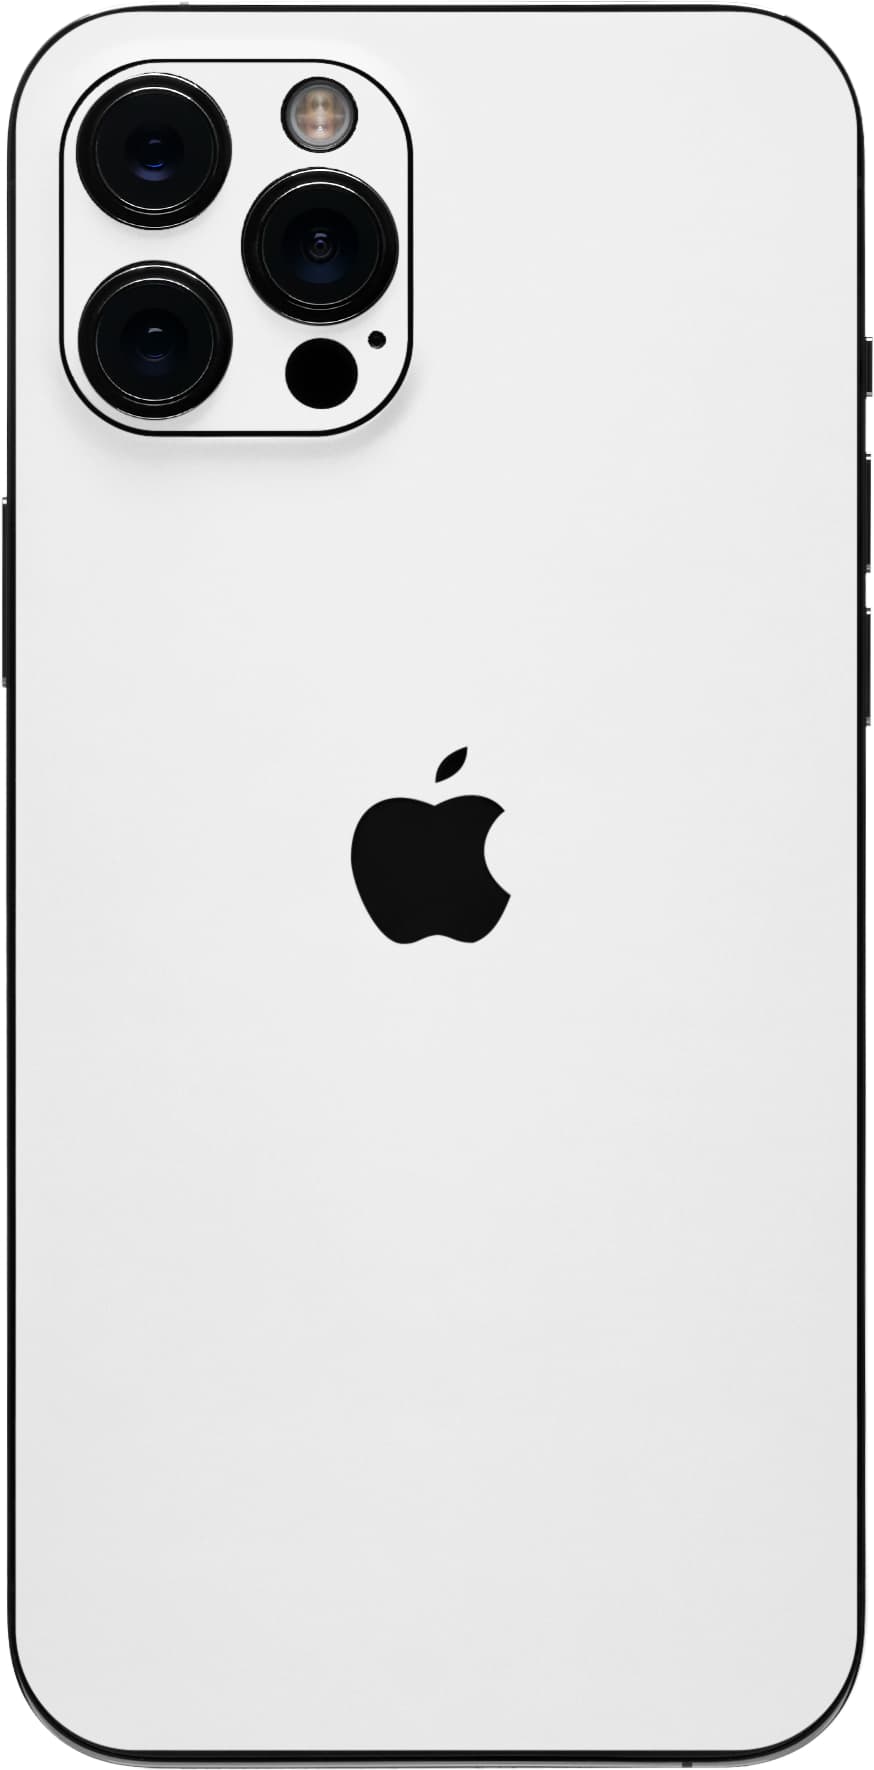 iPhone 12 Pro Max Designer Series Skins – Slickwraps